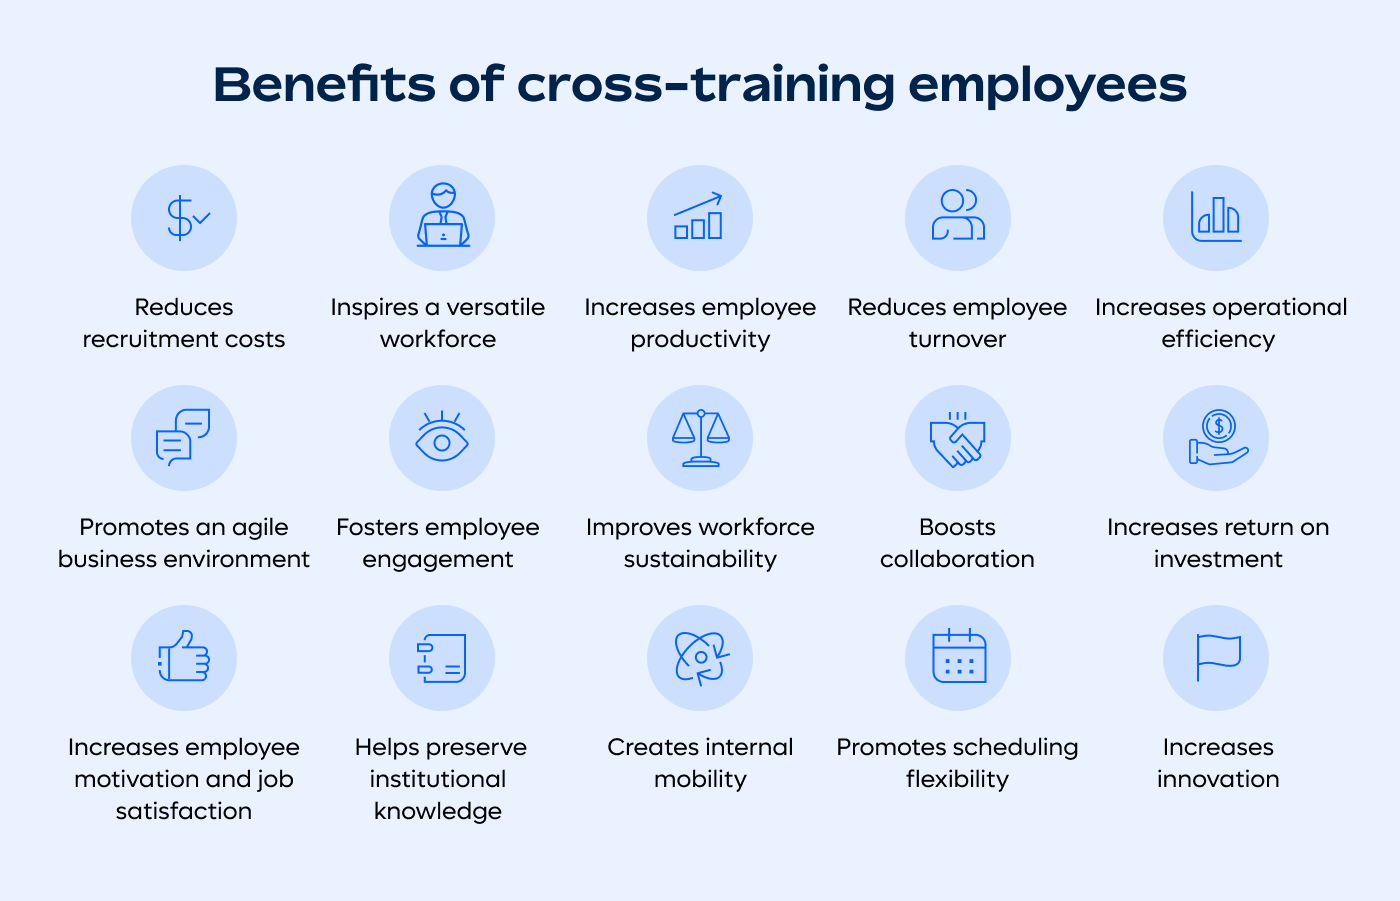 Top benefits of cross-training employees